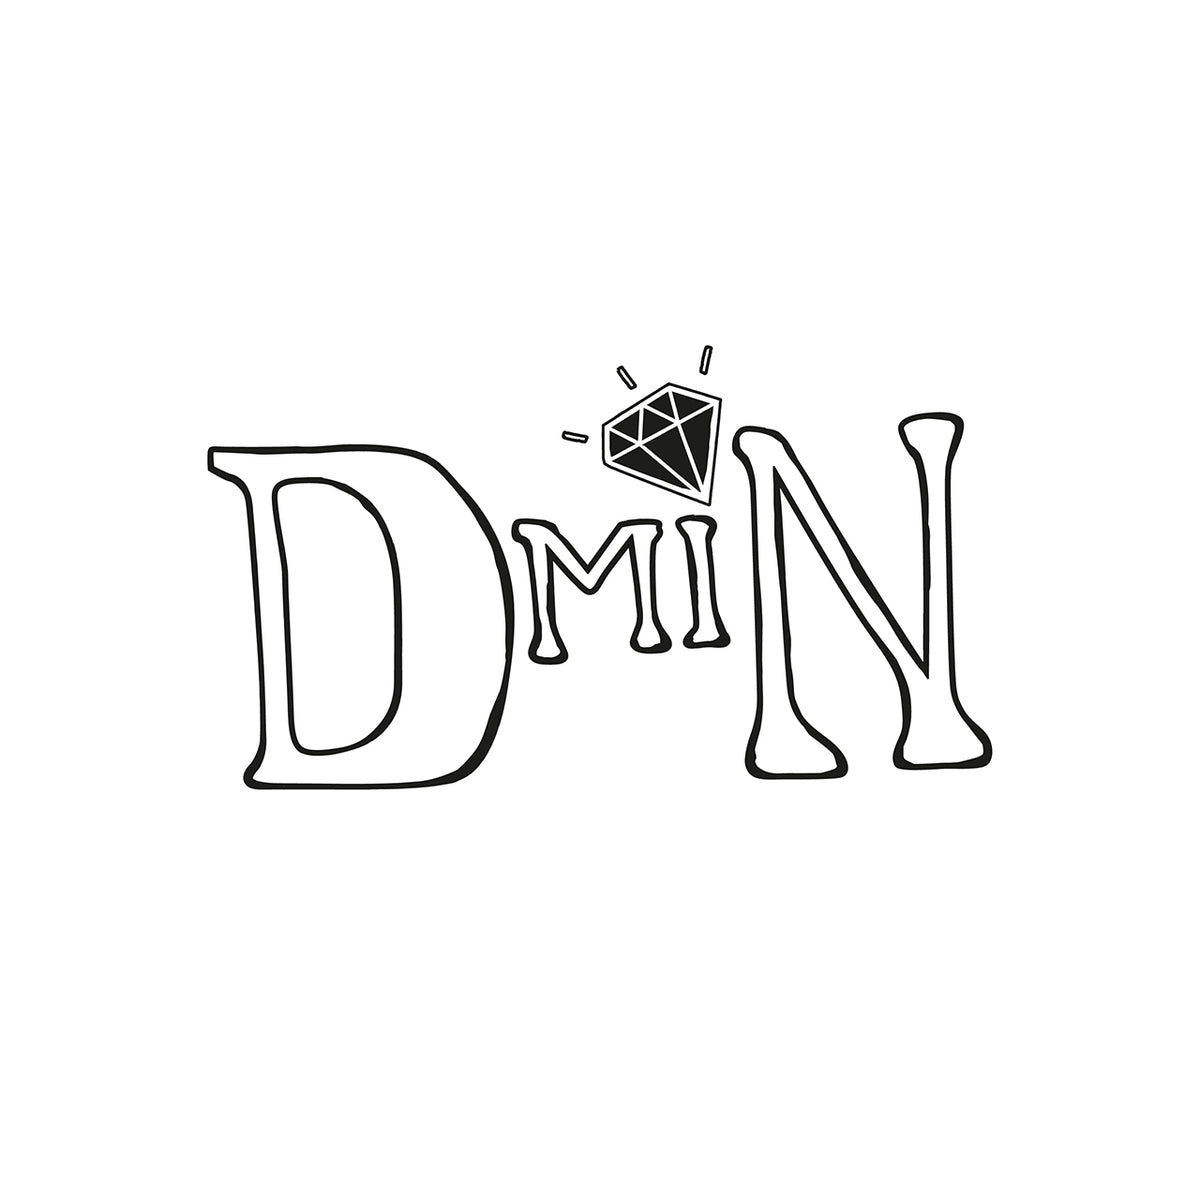 Dmin logo - Alternative - Rusty Surfboards